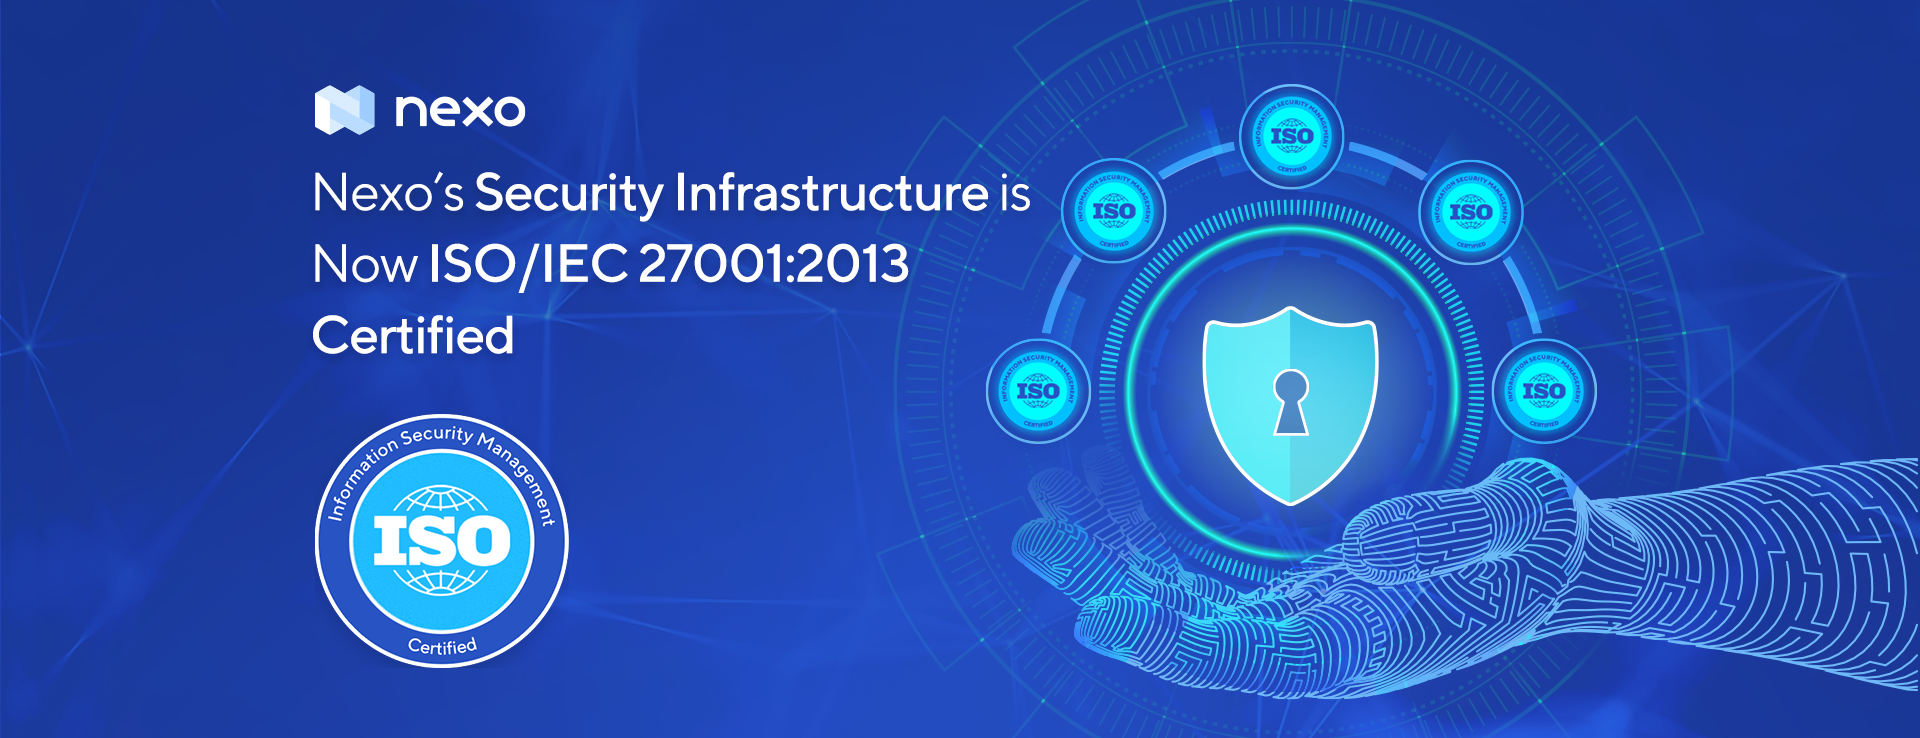 Nexo’s Security Infrastructure Is Now ISO/IEC 27001:2013 Certified